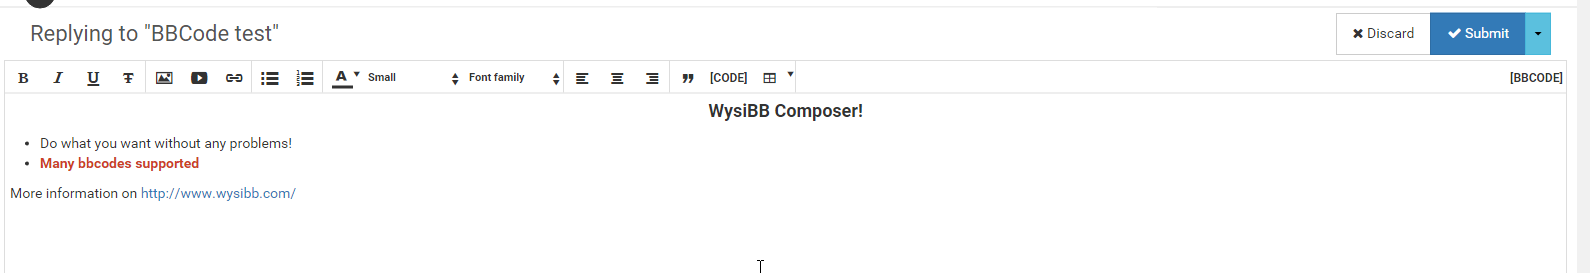 WysiBB Composer